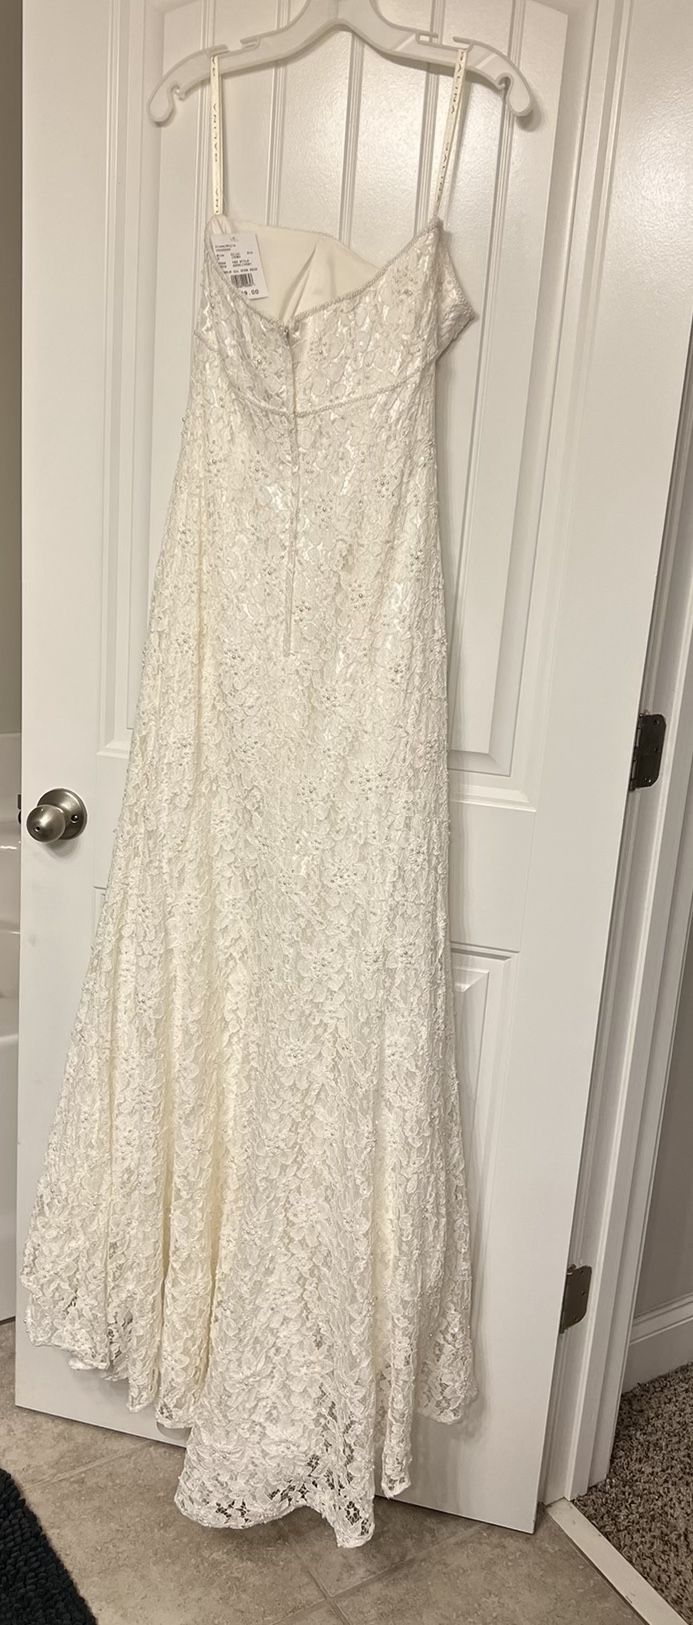 Davids Bridal Wedding Dress Size 6